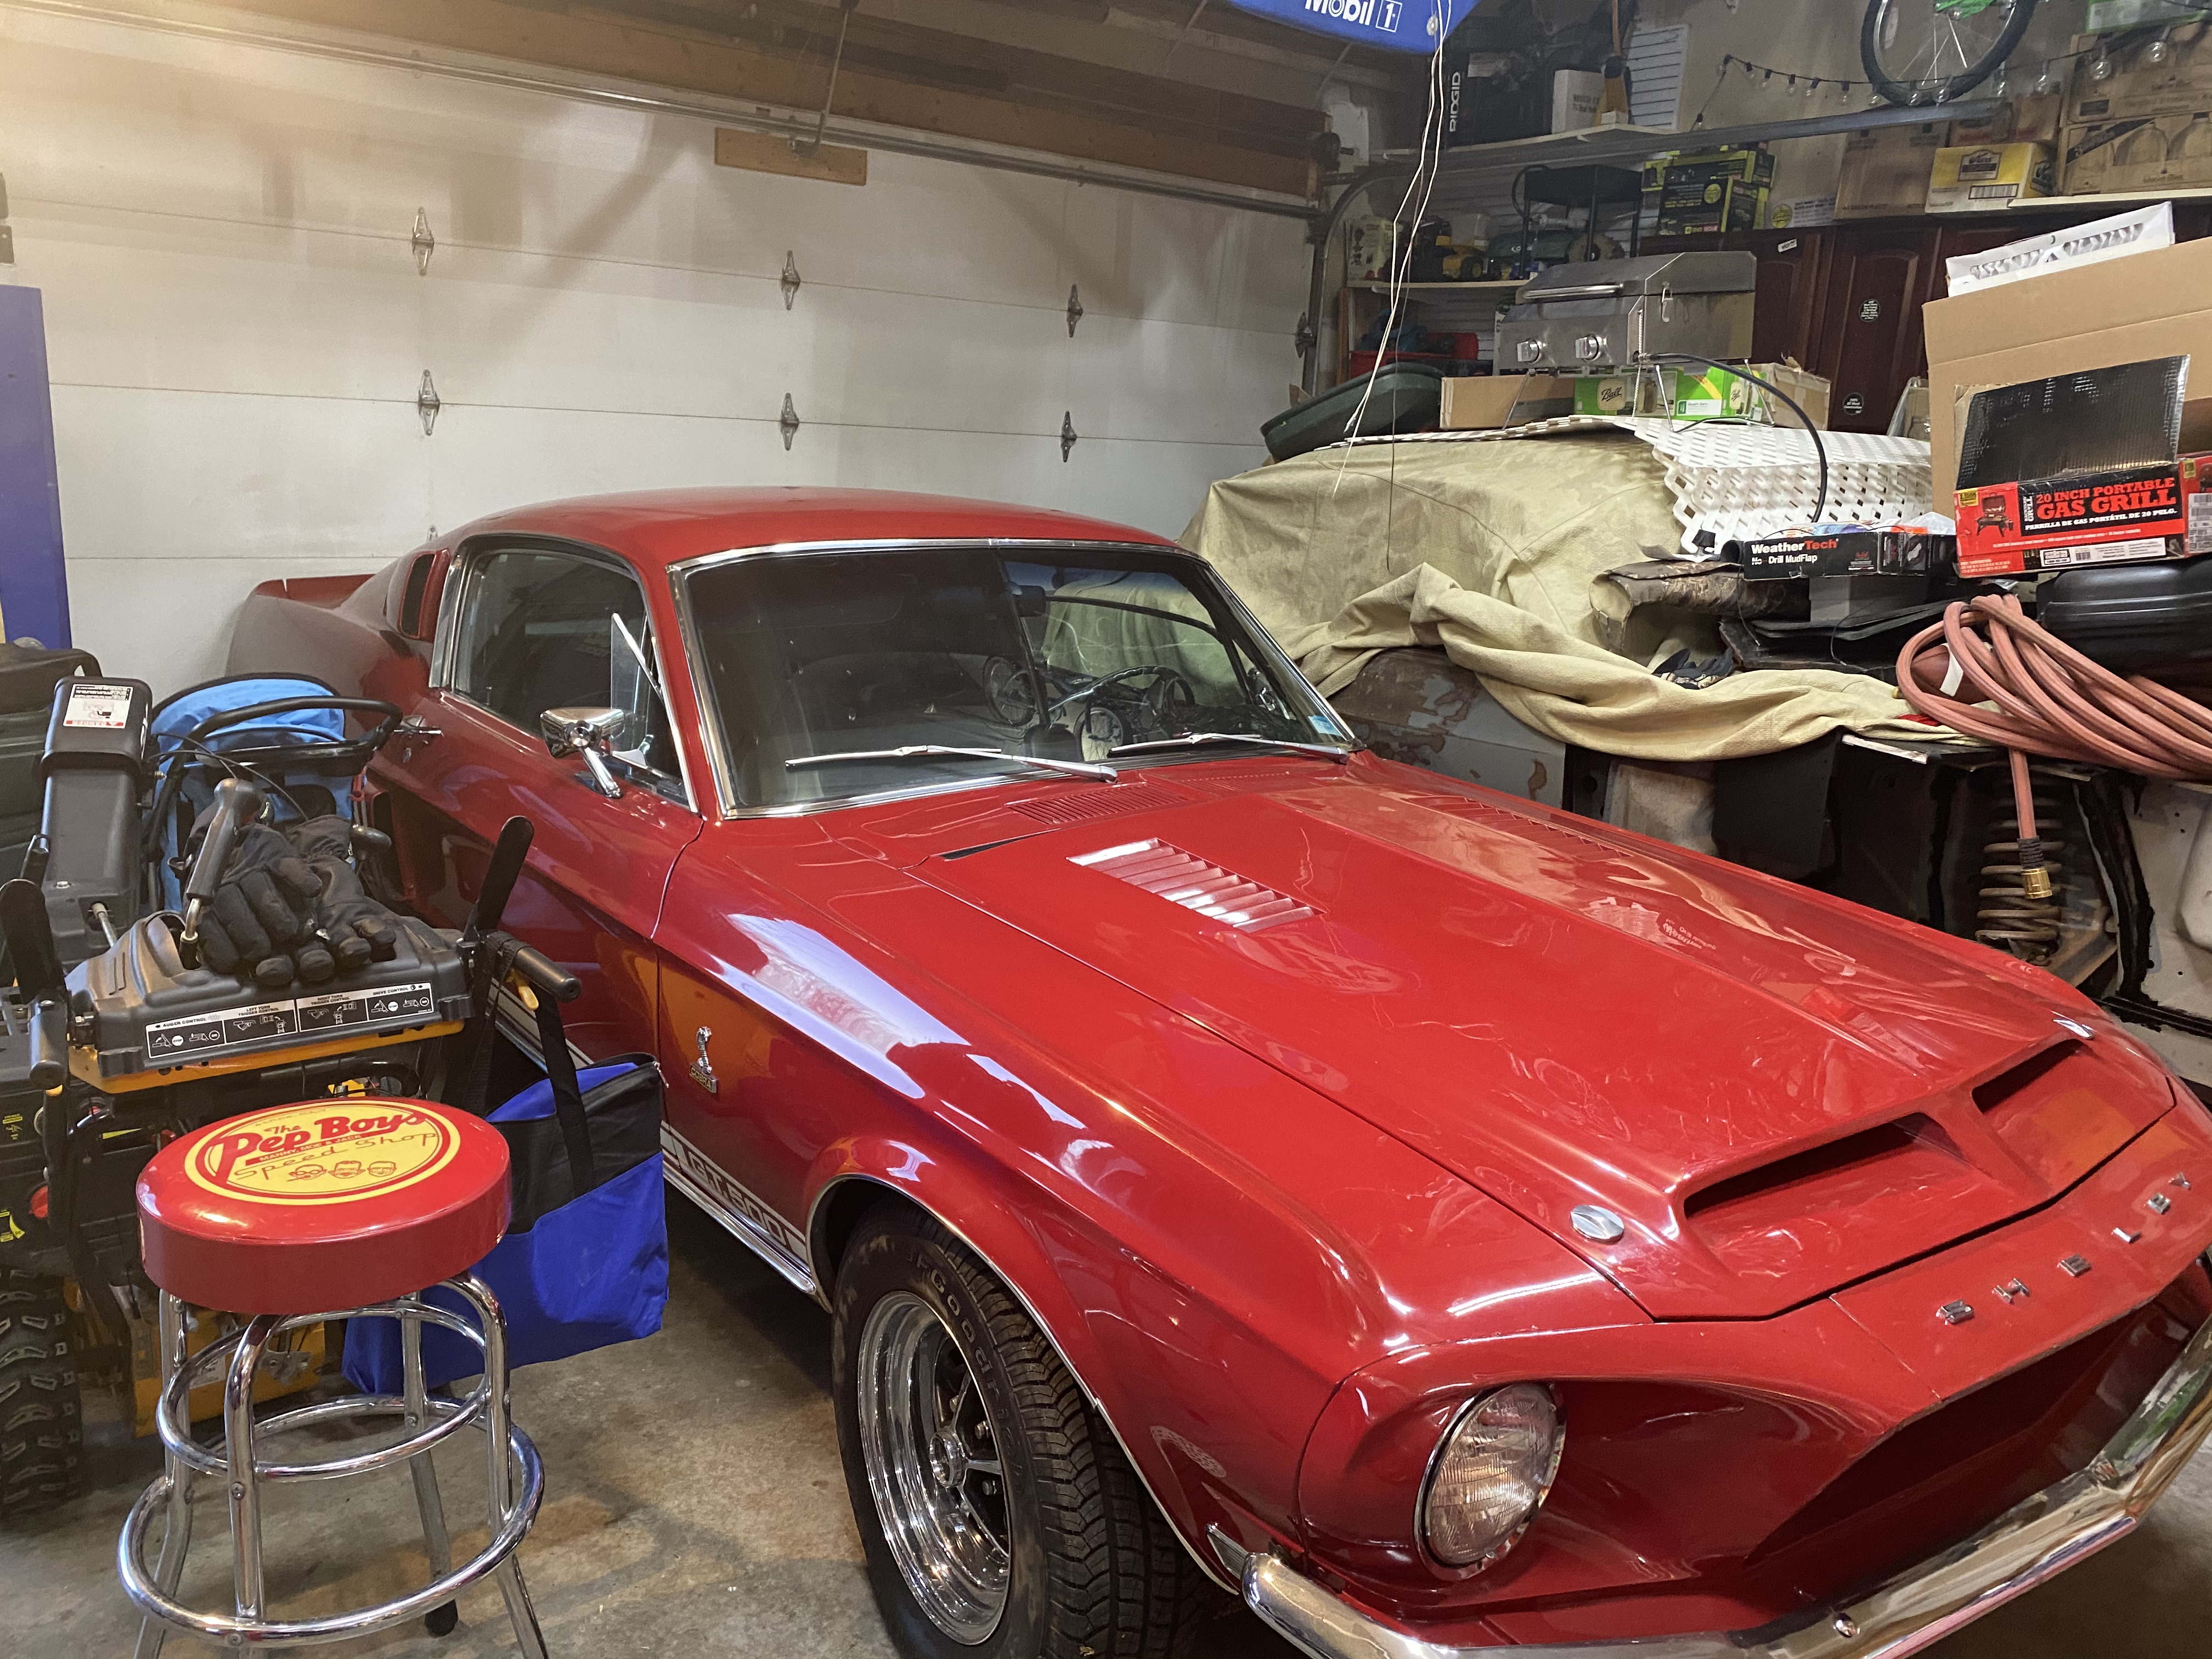 1968 Mustang
(Red)